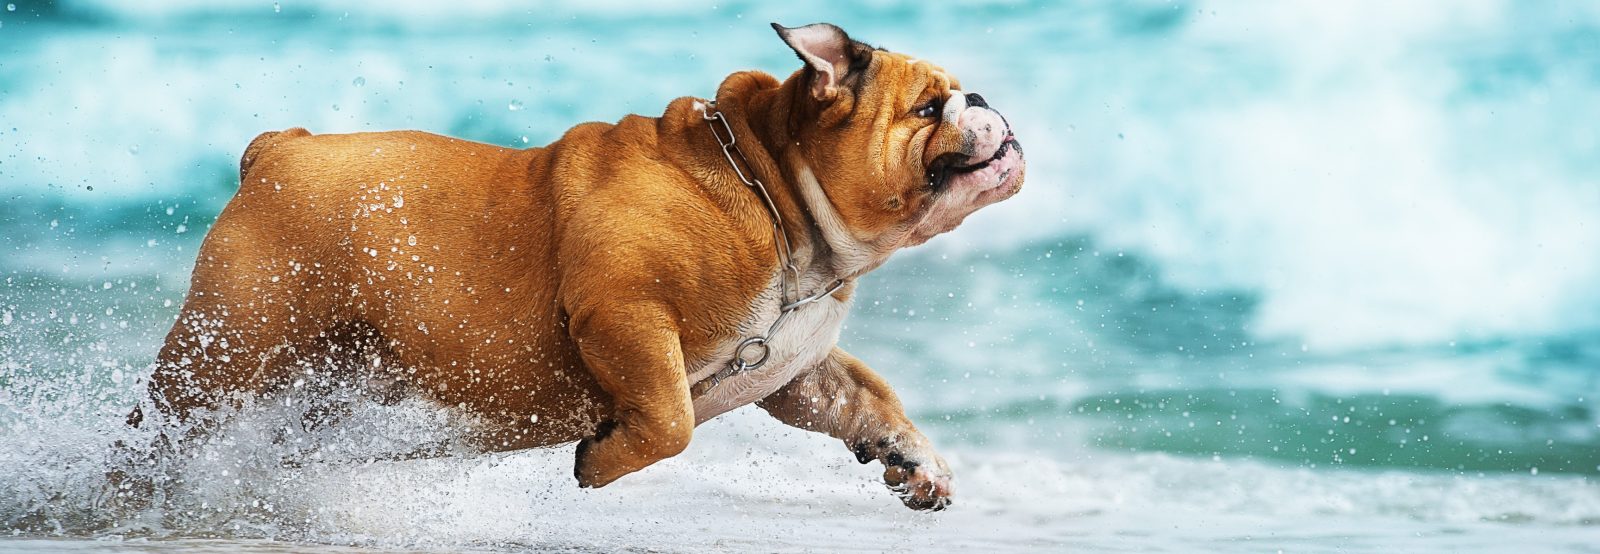 English Bulldog playing in the ocean, wet dog, Summer and Hardwood Flooring